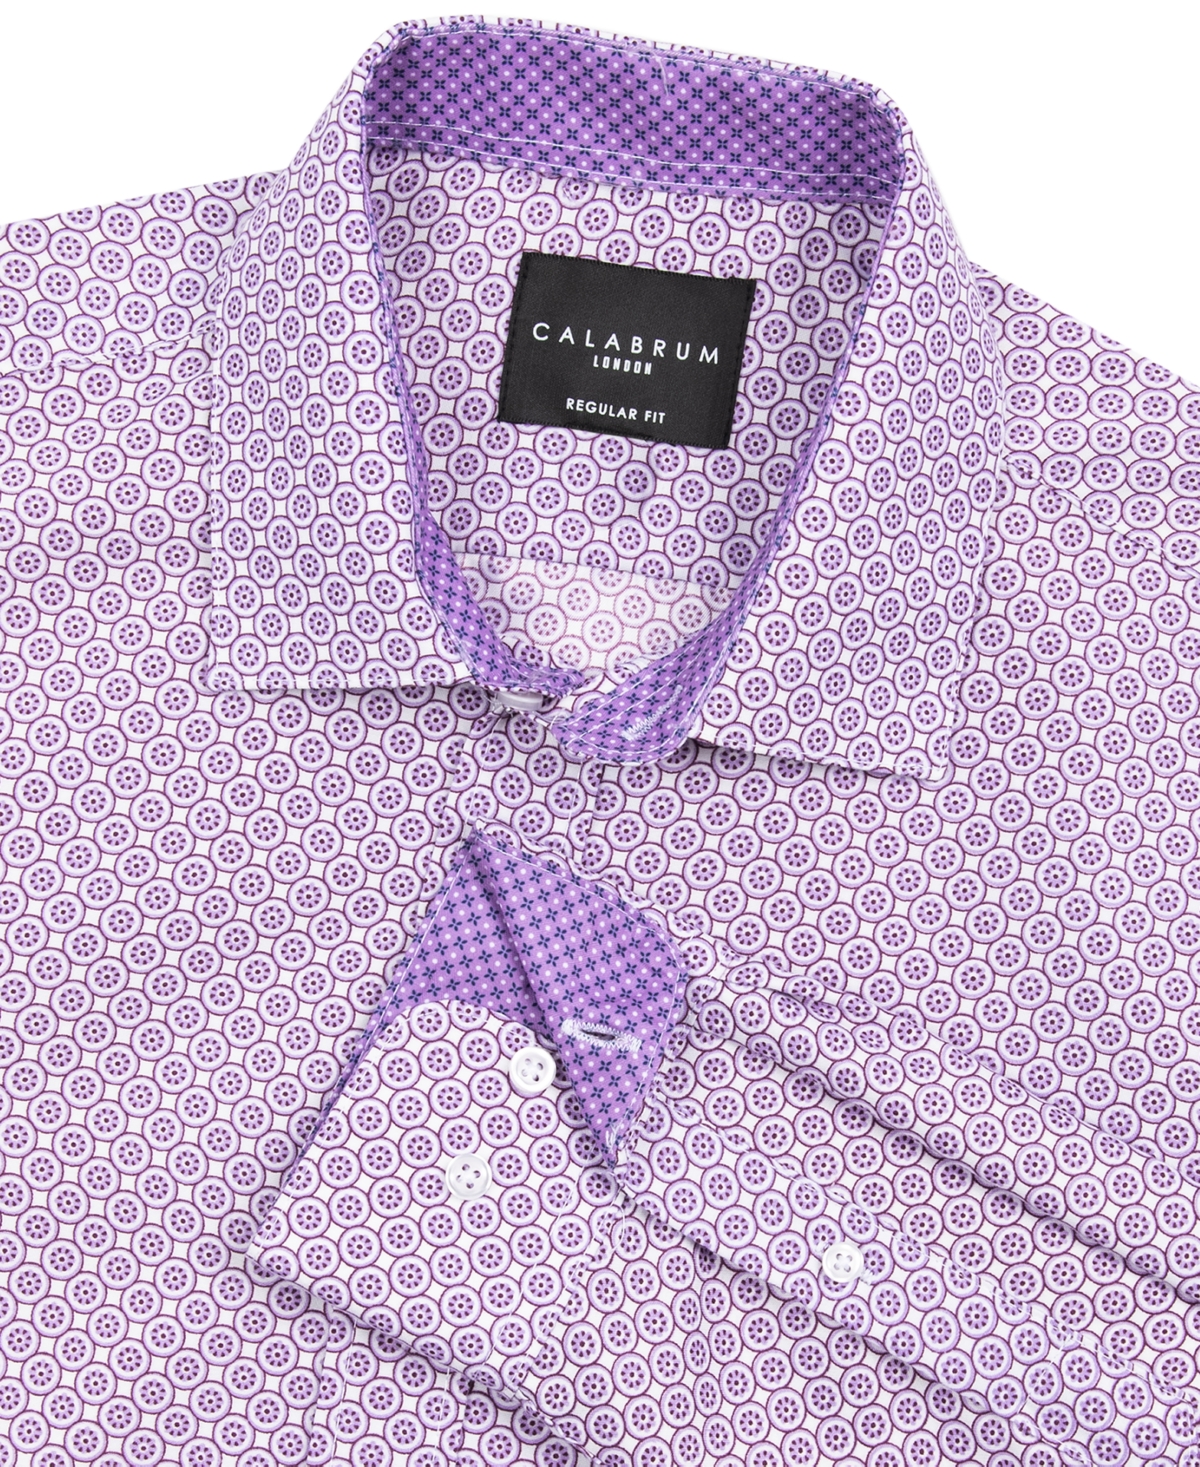 Calabrum Men's Regular Fit Dot Print Wrinkle Free Performance Dress Shirt In Lilac